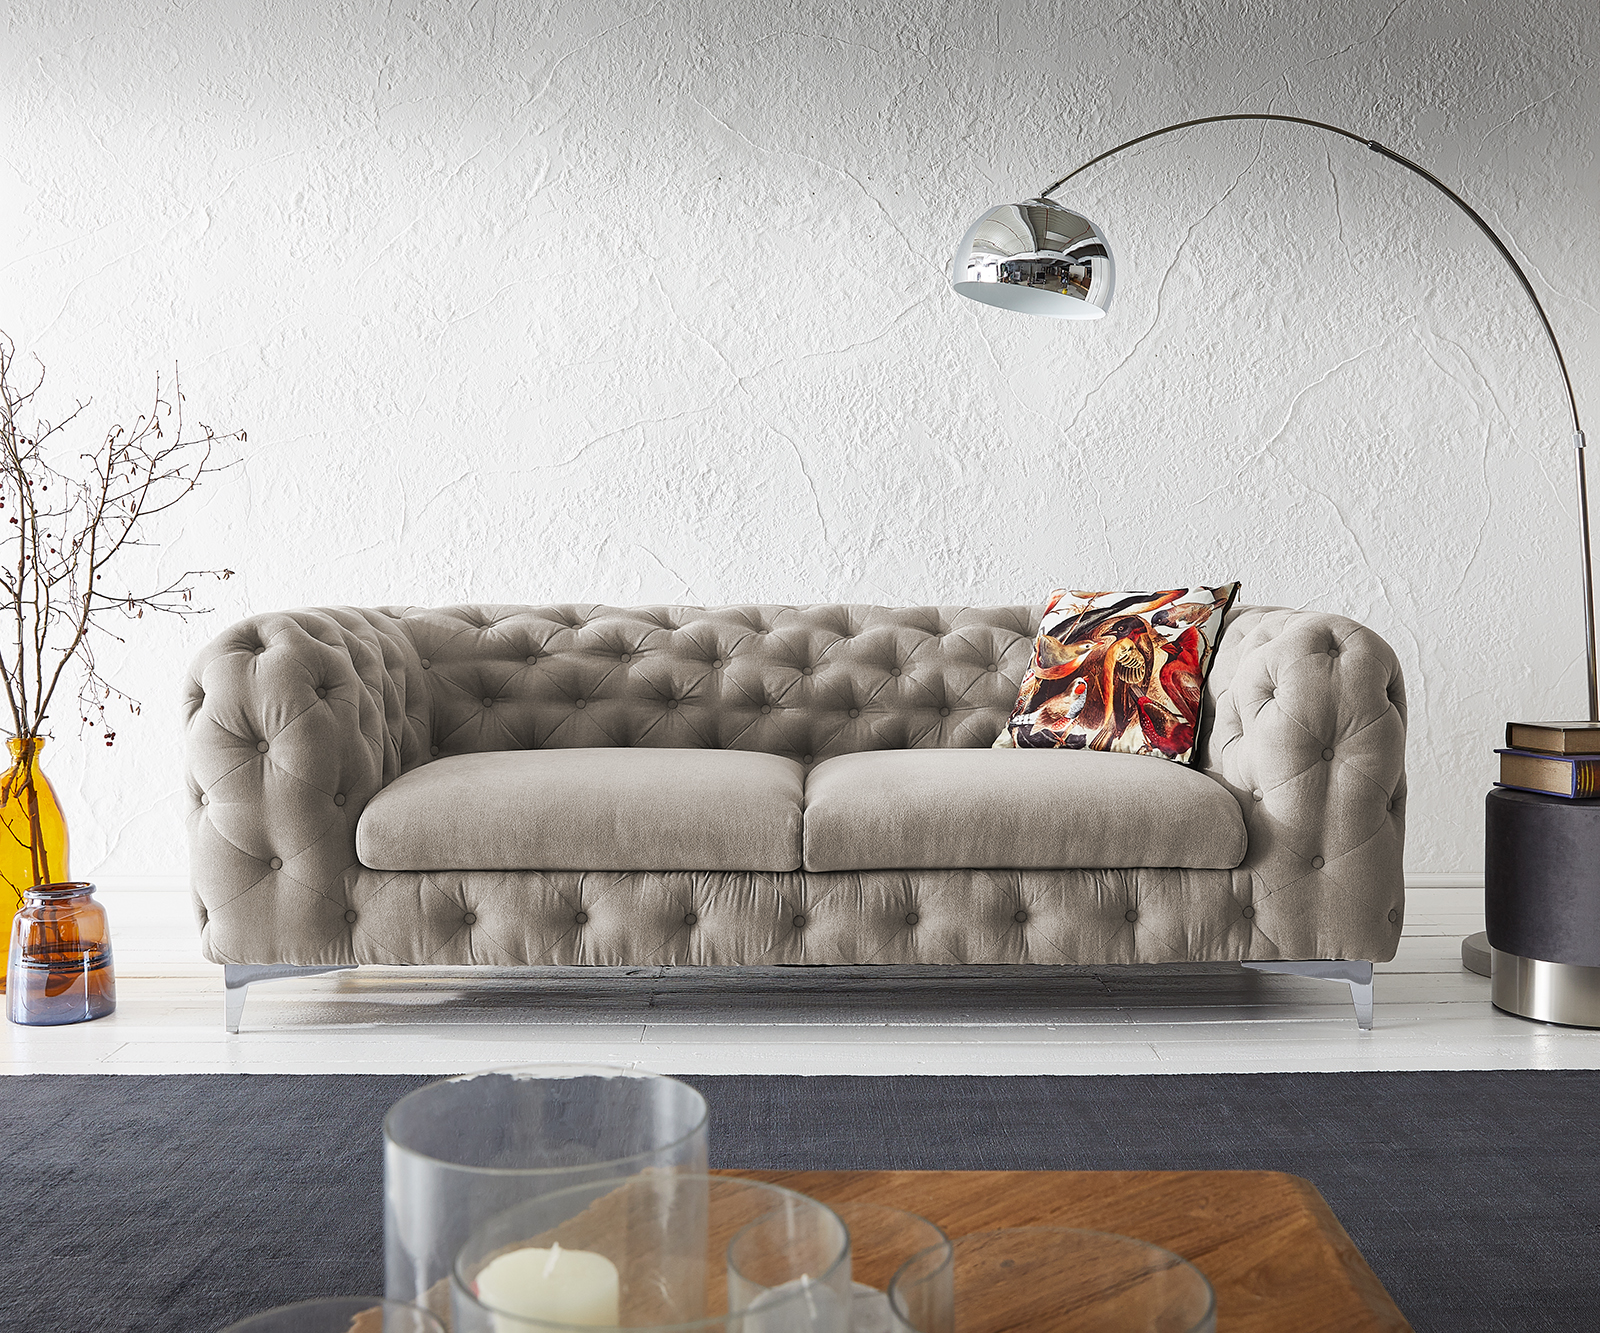 DELIFE Couch Corleone 225×97 cm Beige 3-Sitzer Sofa, 3 Sitzer